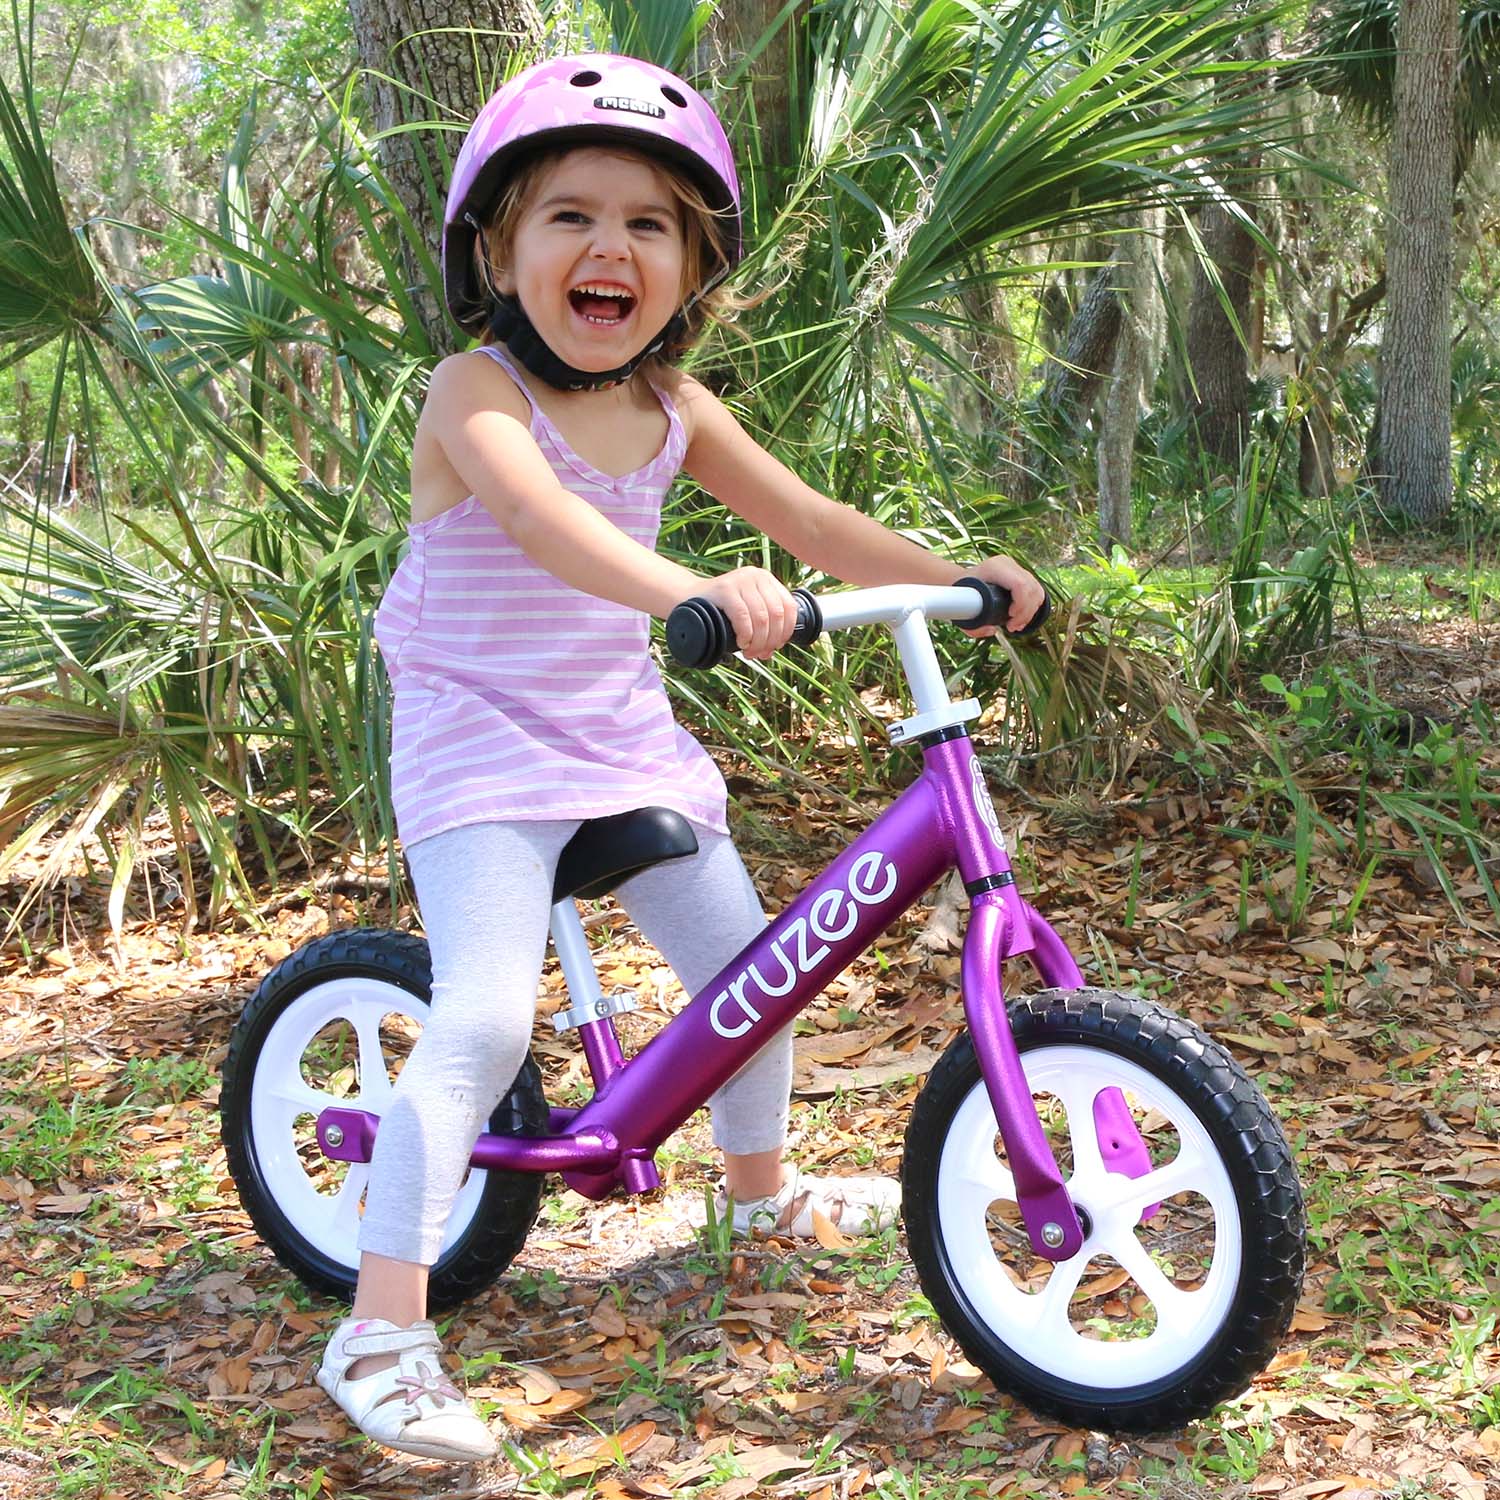 cruzee-balance-bike-purple-with-white-wheels-lifestyle